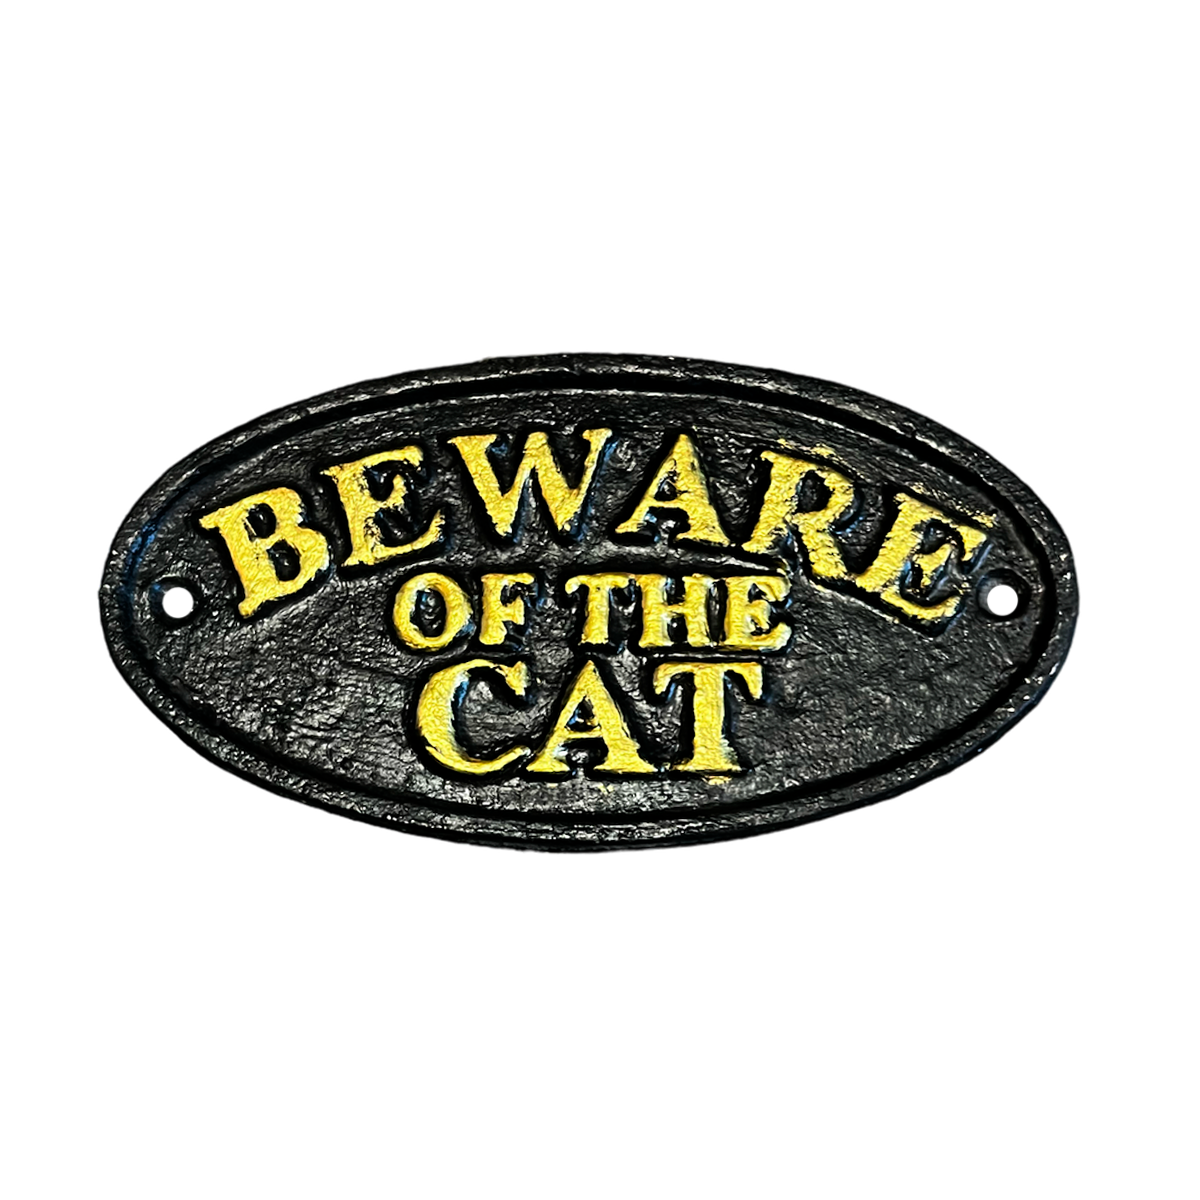 Placa "Beware of the cat"